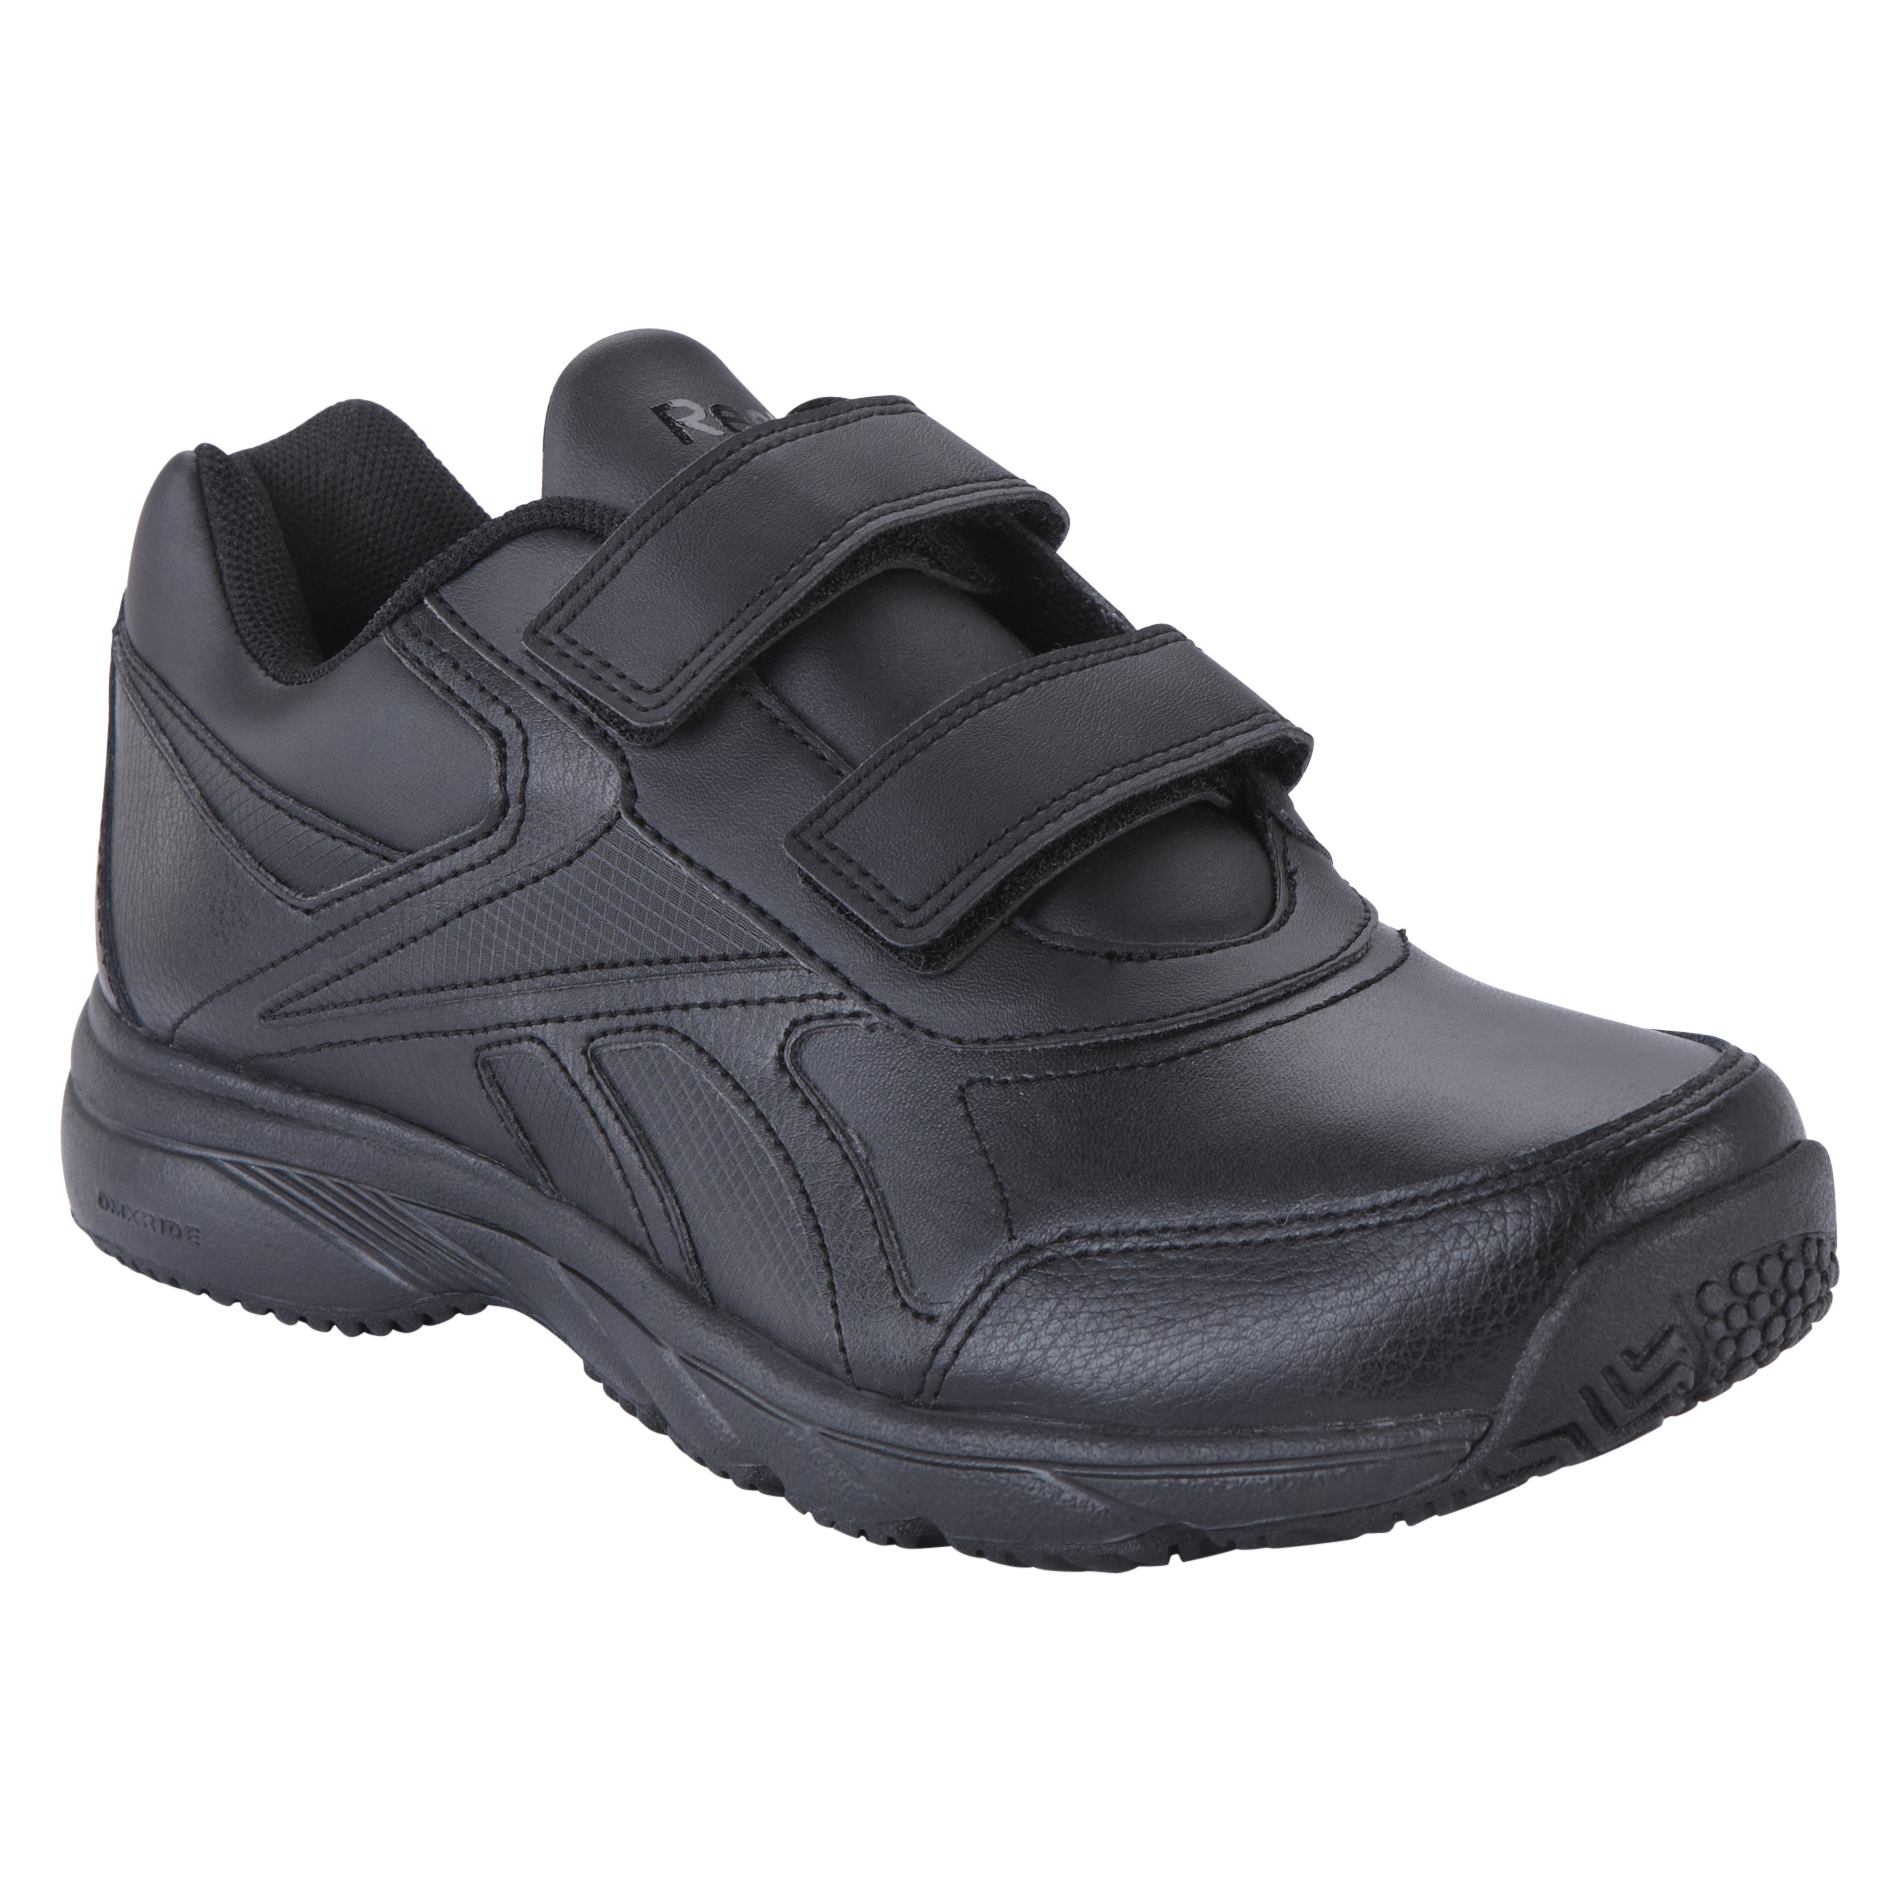 Reebok Men's Work N'Cush Double Velcro Slip Resistant Shoe - Black